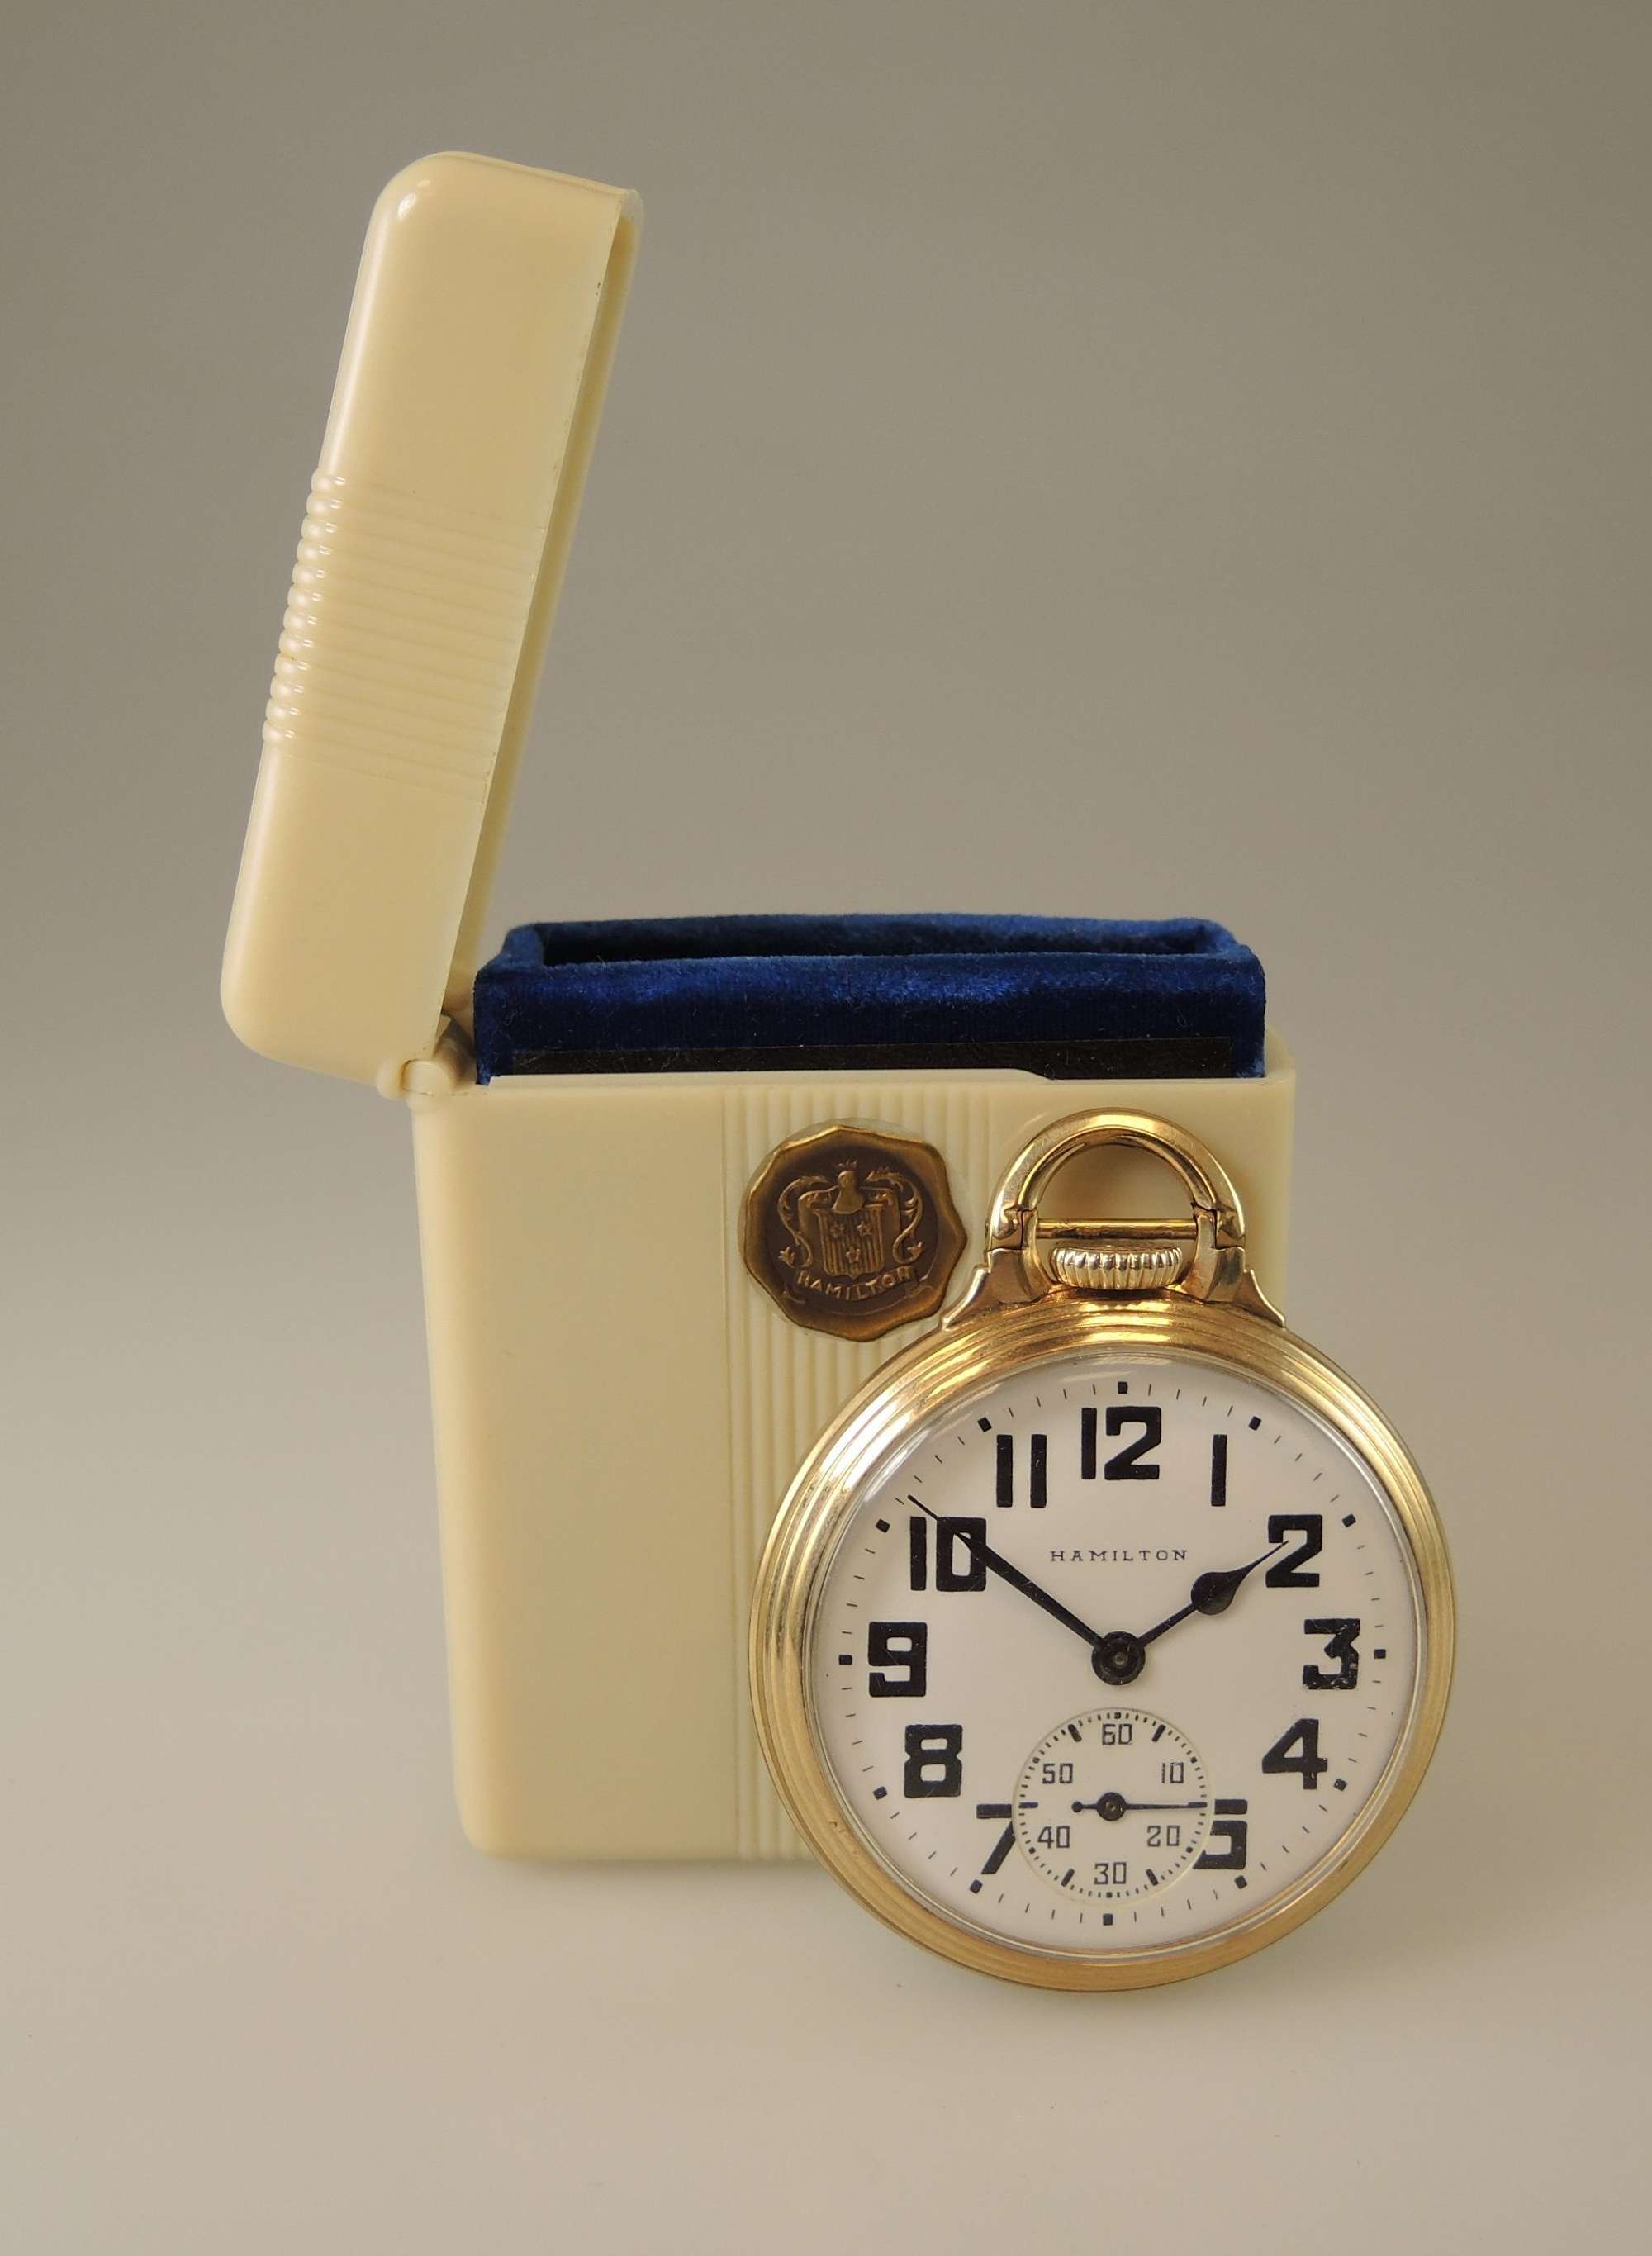 16 size 21 Jewel Hamilton 992B Railroad Pocket Watch with Box c1945